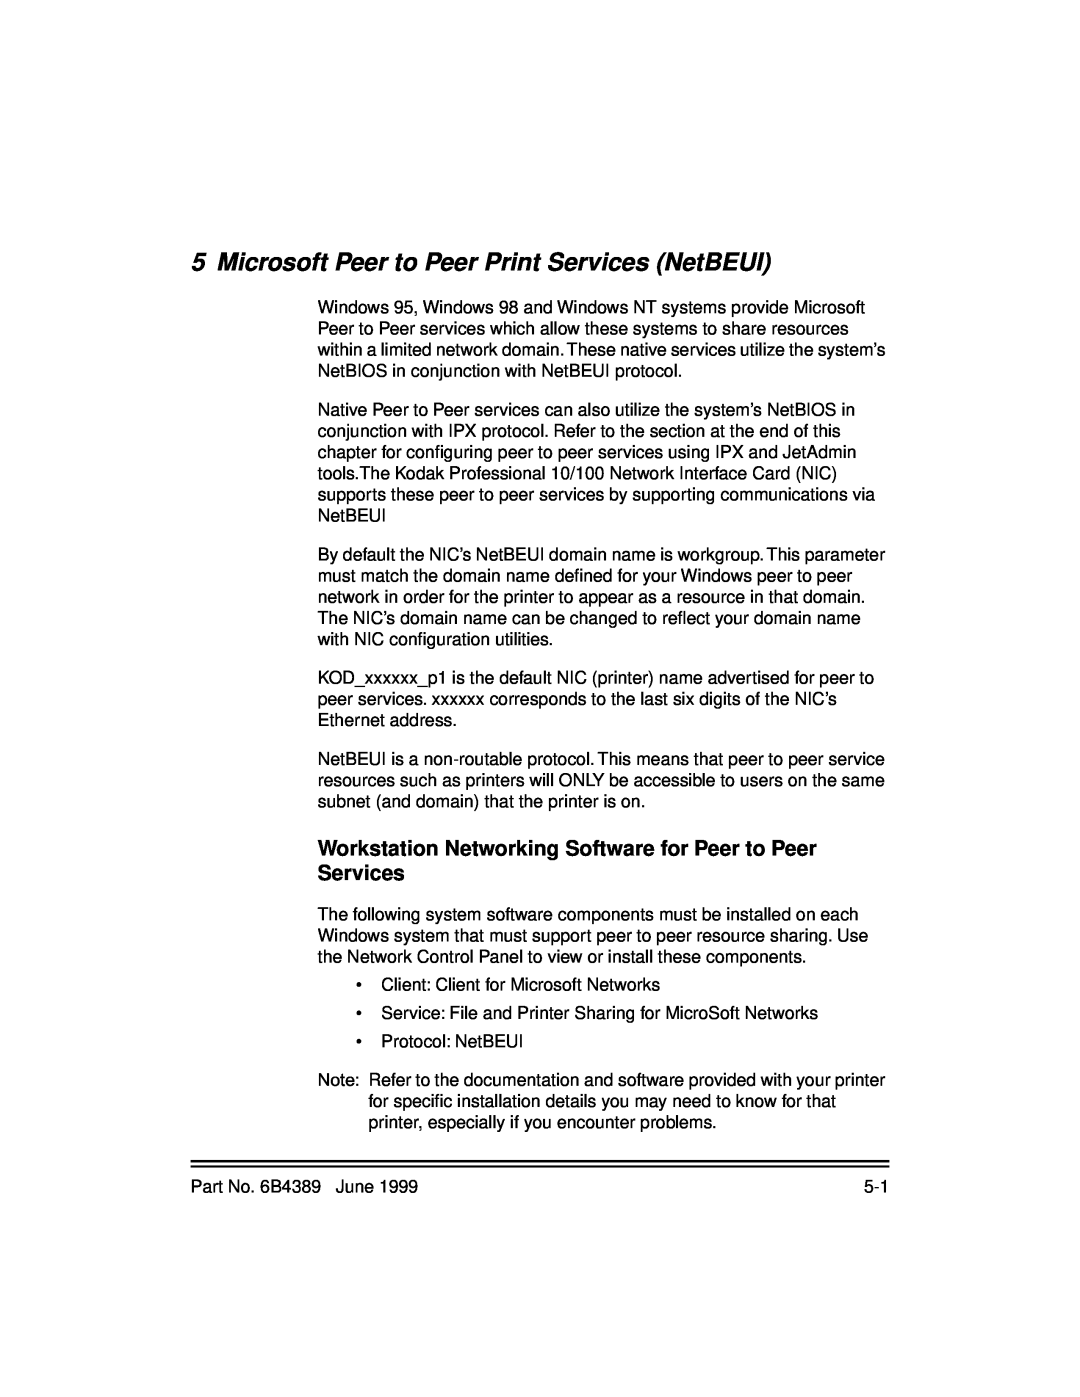 Kodak 8660, 8670 Microsoft Peer to Peer Print Services NetBEUI, Workstation Networking Software for Peer to Peer Services 